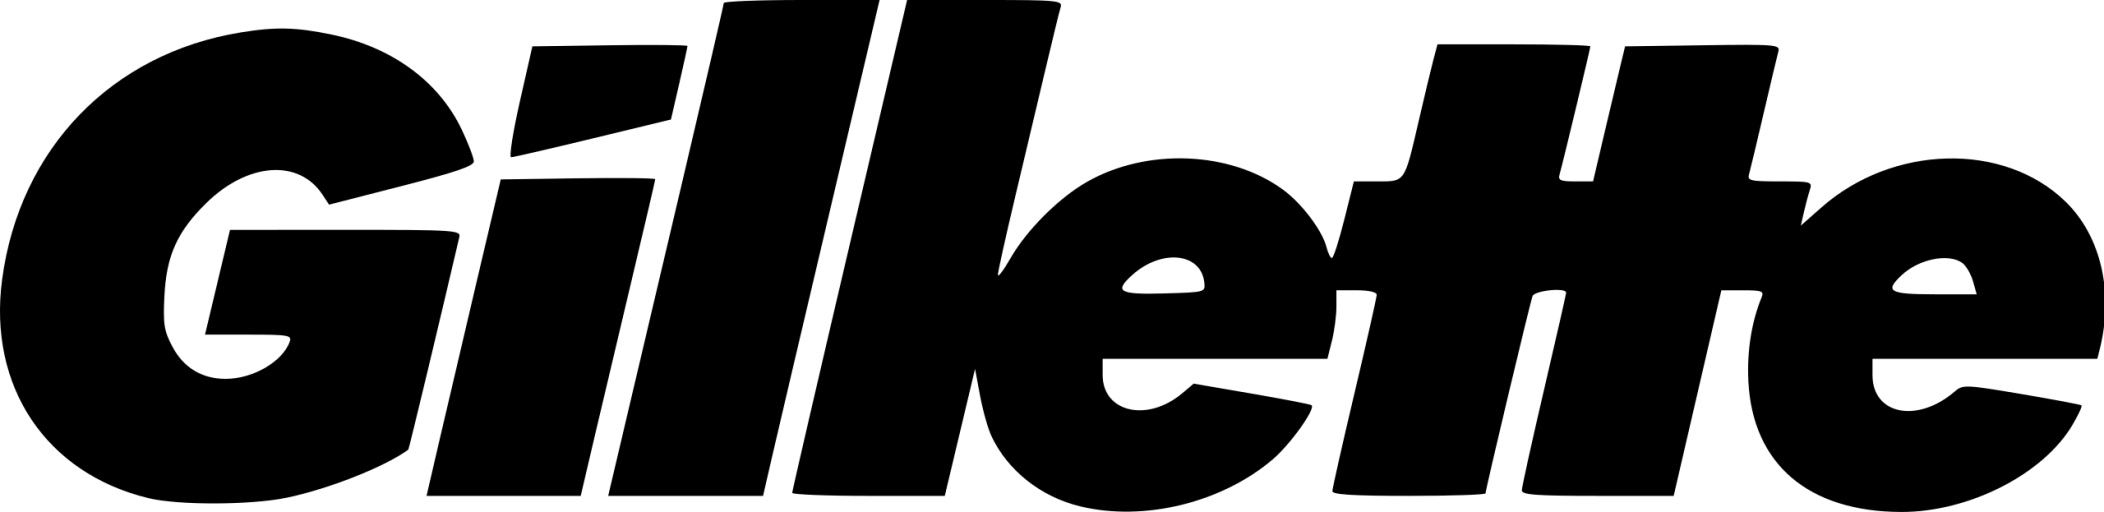 Logo firmy Gillette.